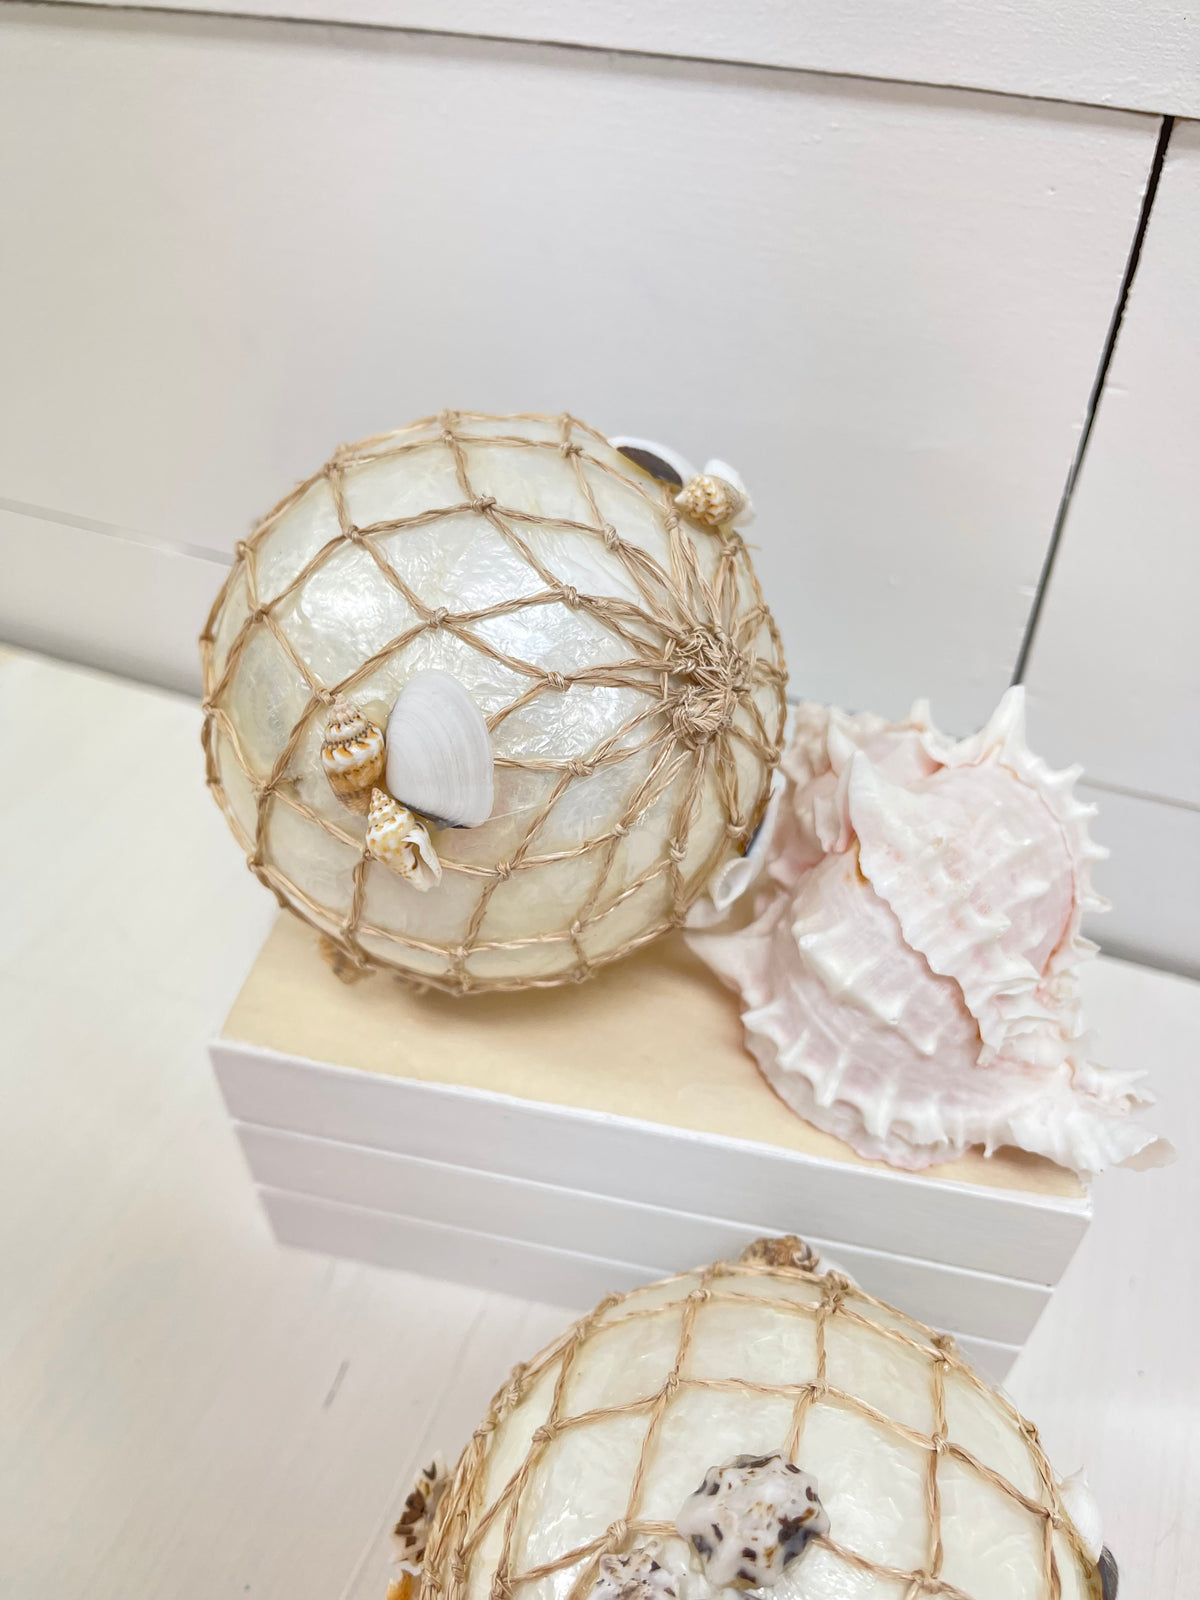 Capiz Shell Ball w/Seashells, Pearl & Abaca Net